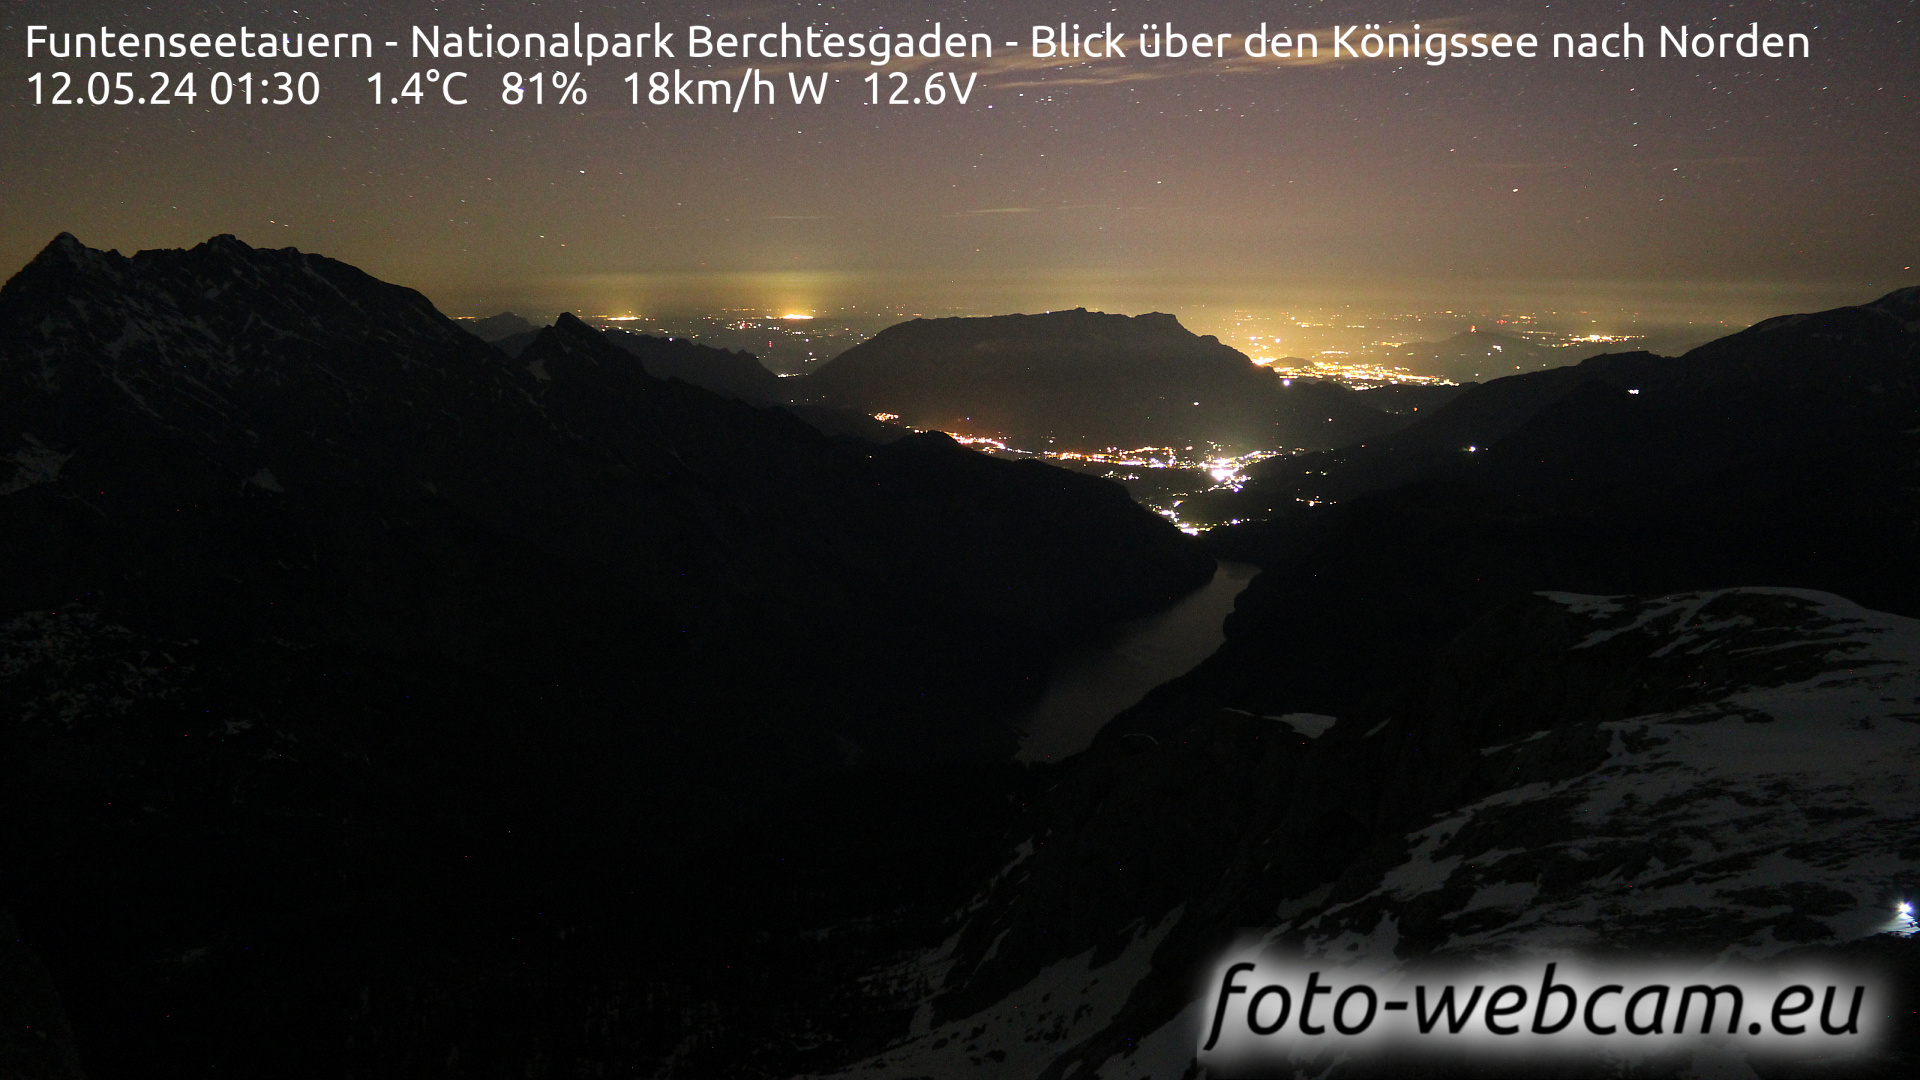 Berchtesgaden Jue. 01:48